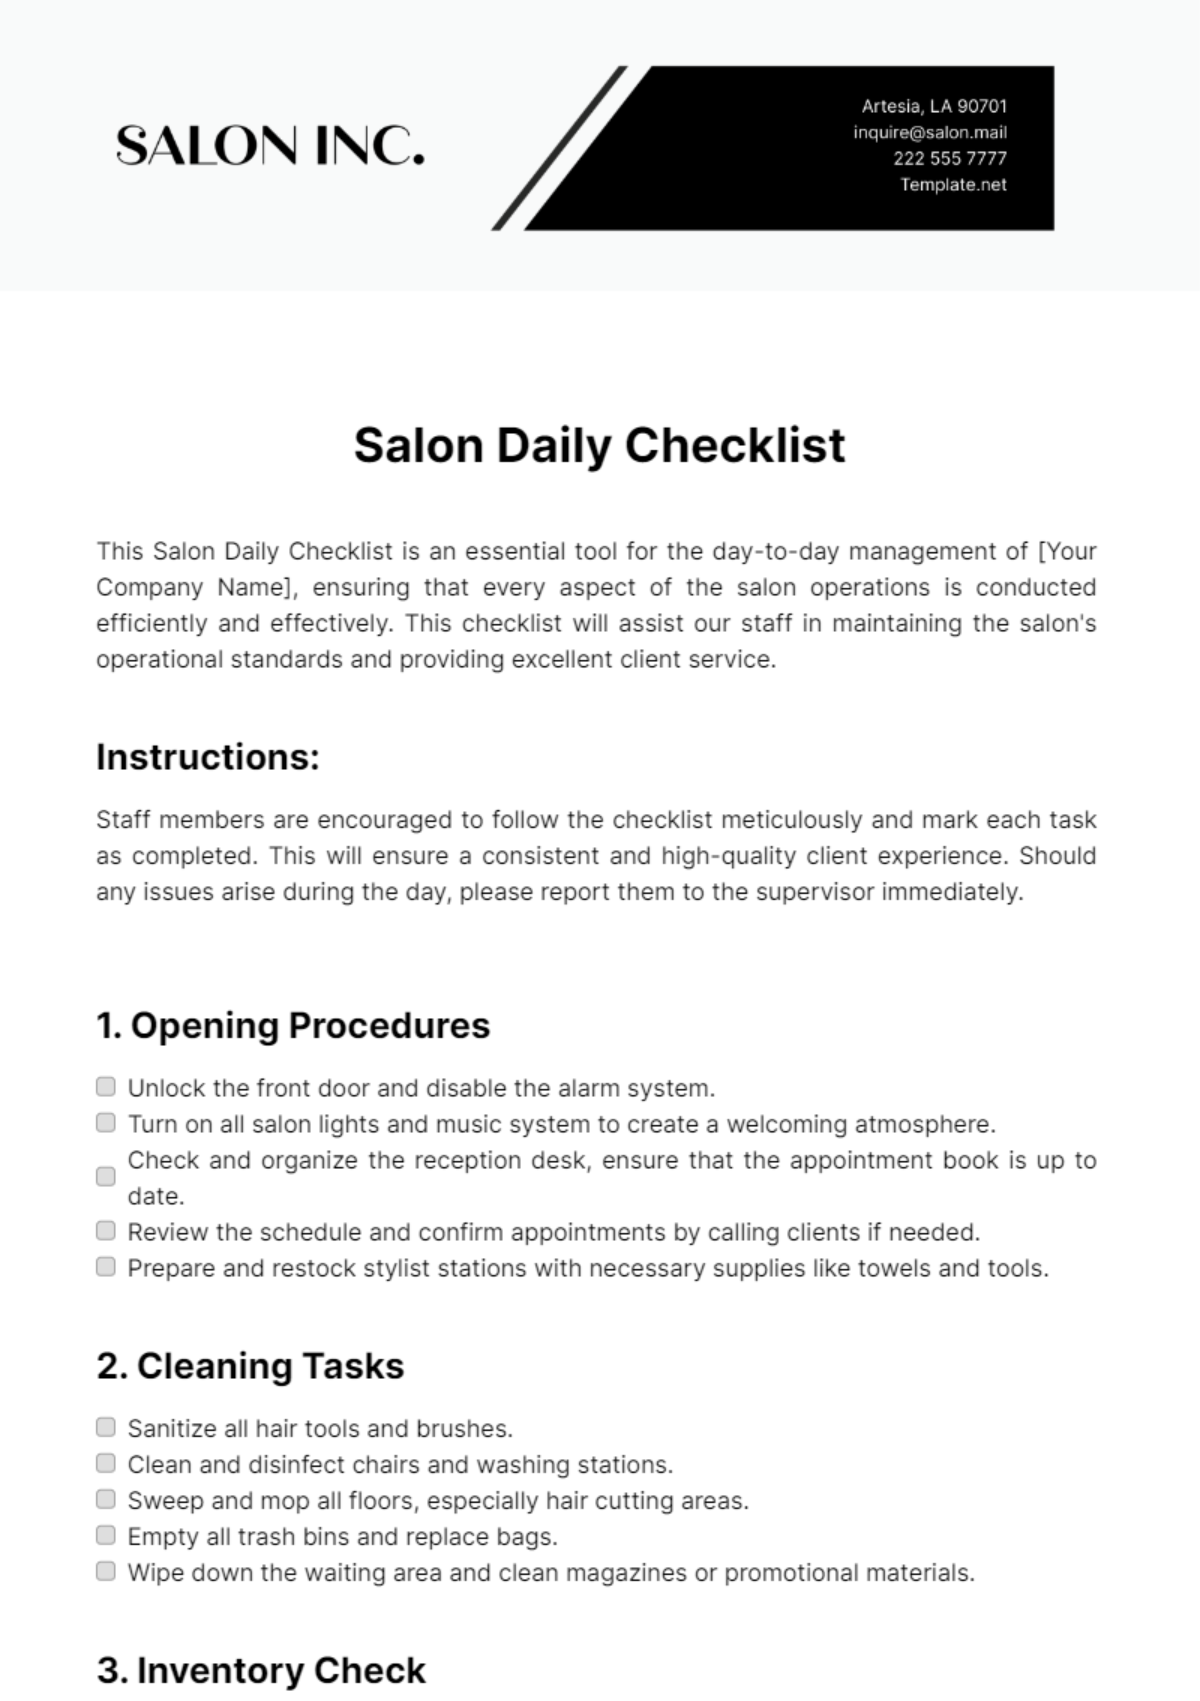 Salon Daily Checklist Template